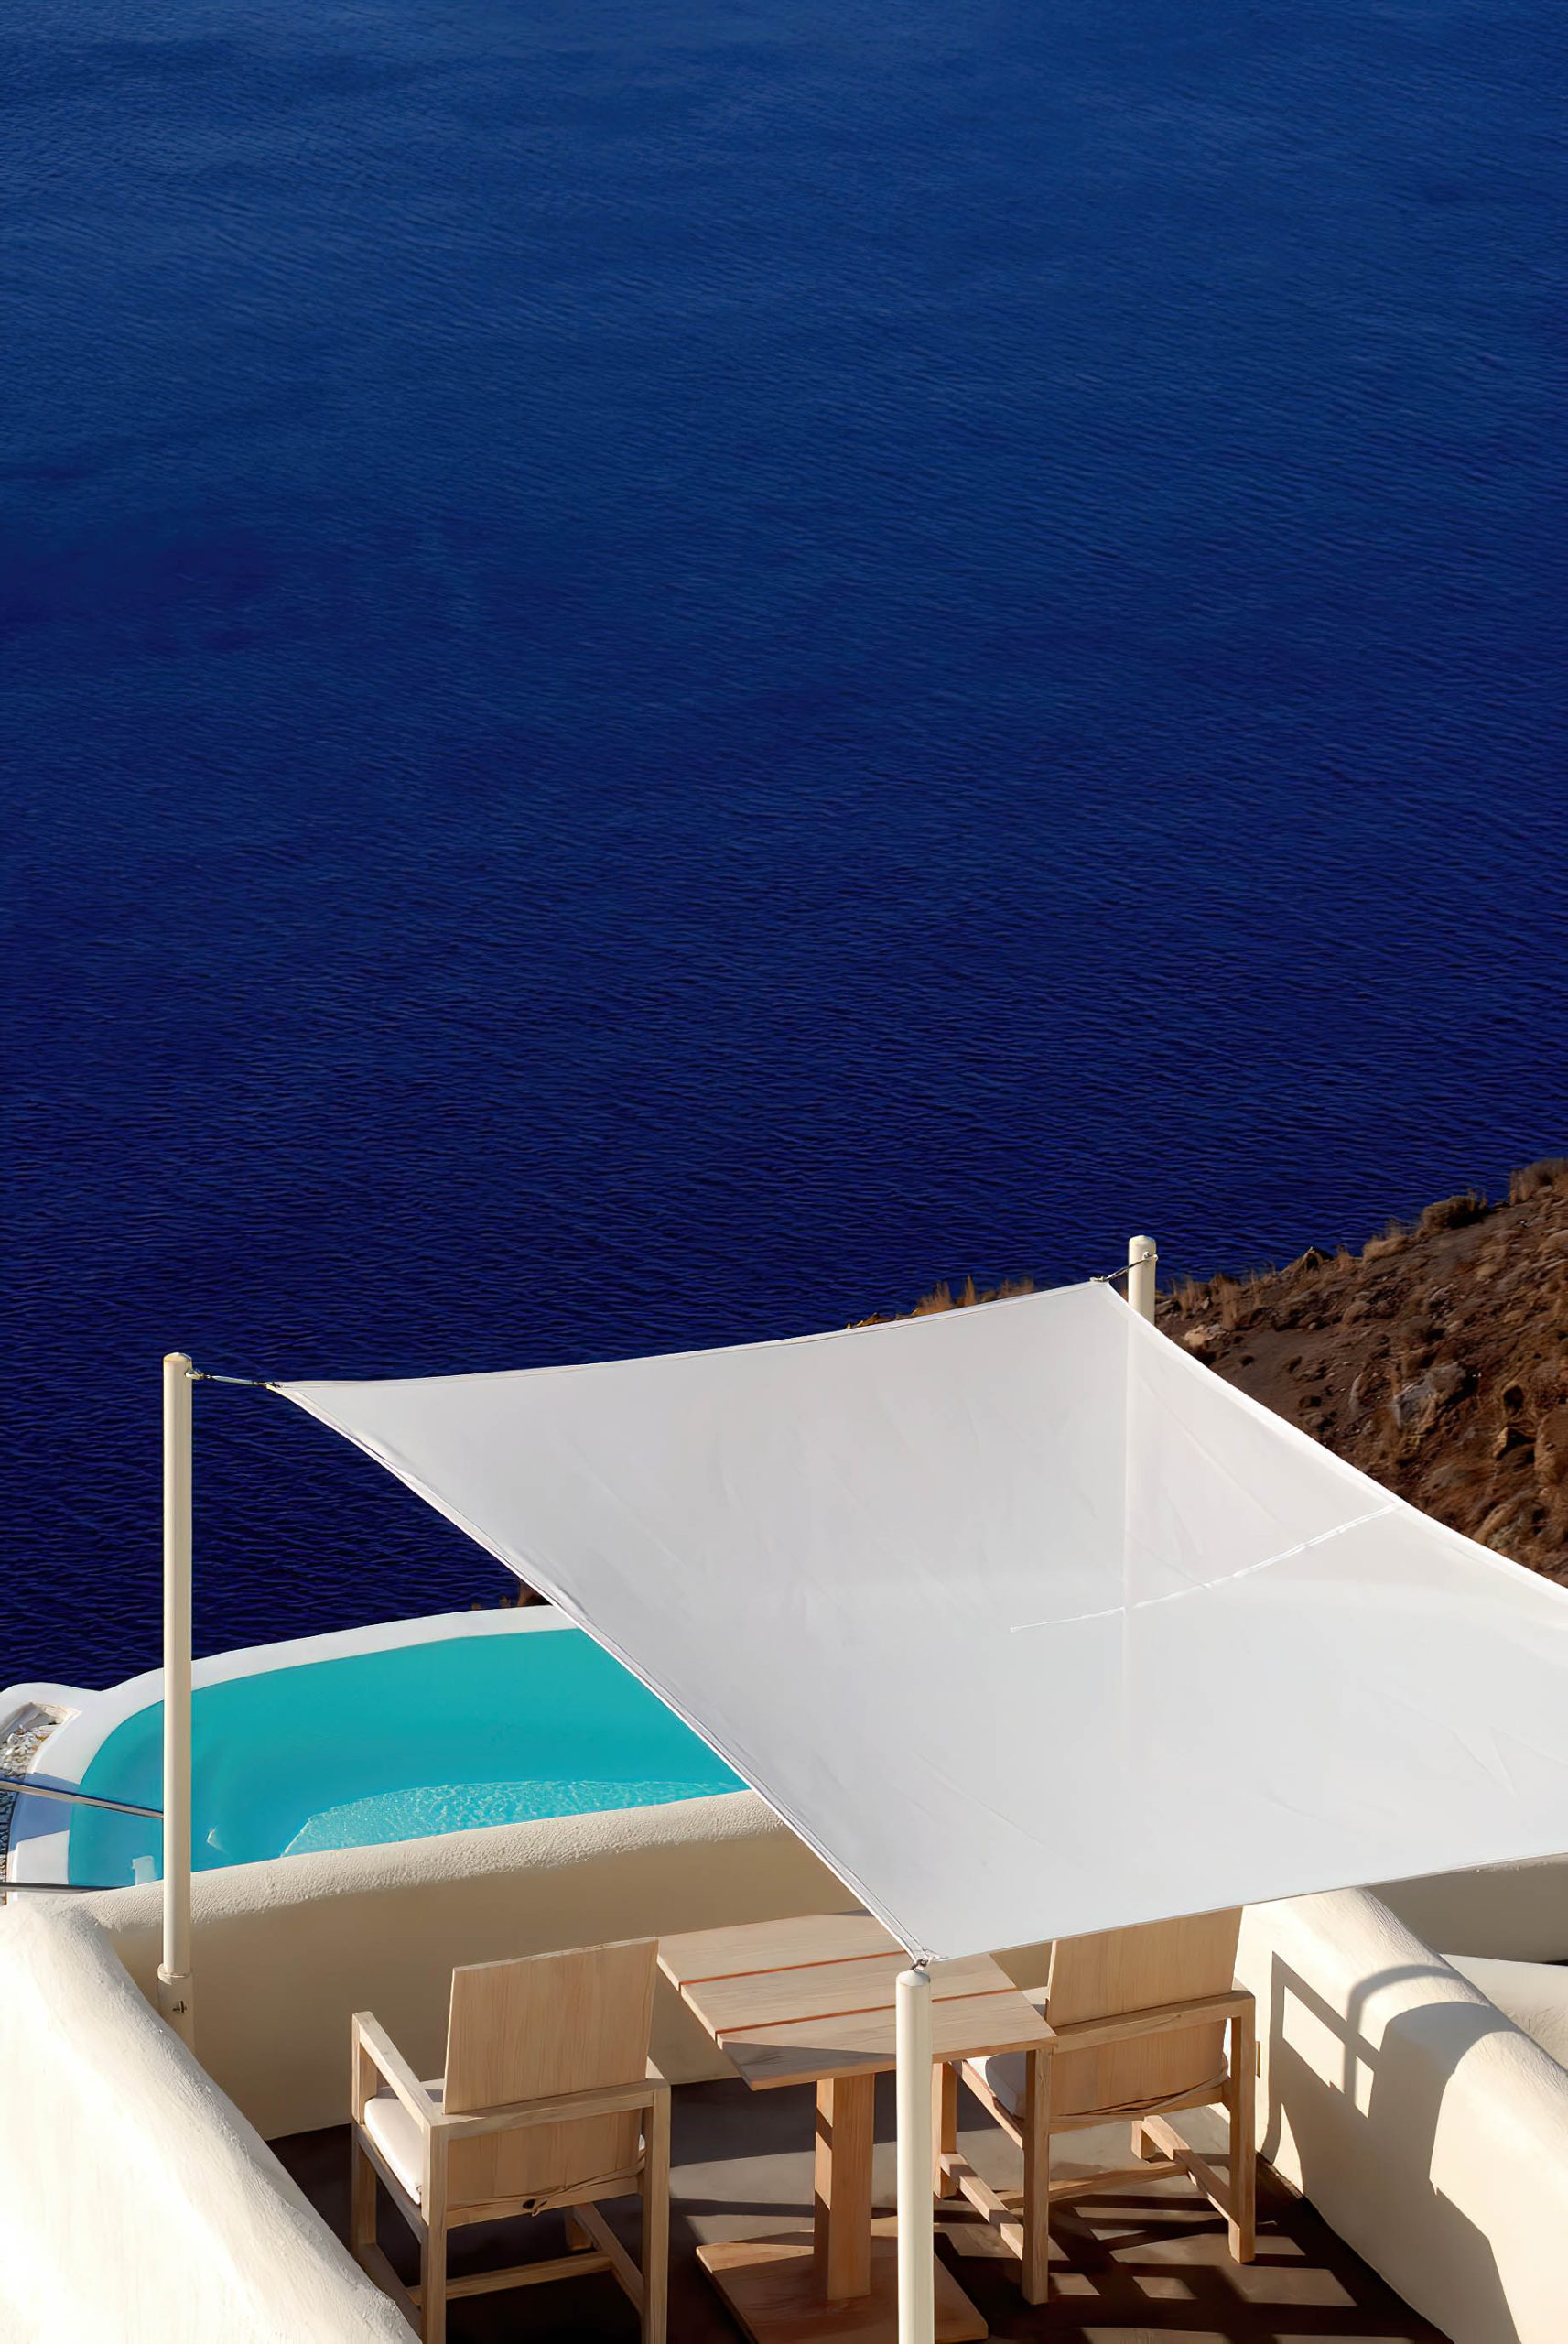 Mystique Hotel Santorini – Oia, Santorini Island, Greece – Clifftop Balcony Pool Ocean View